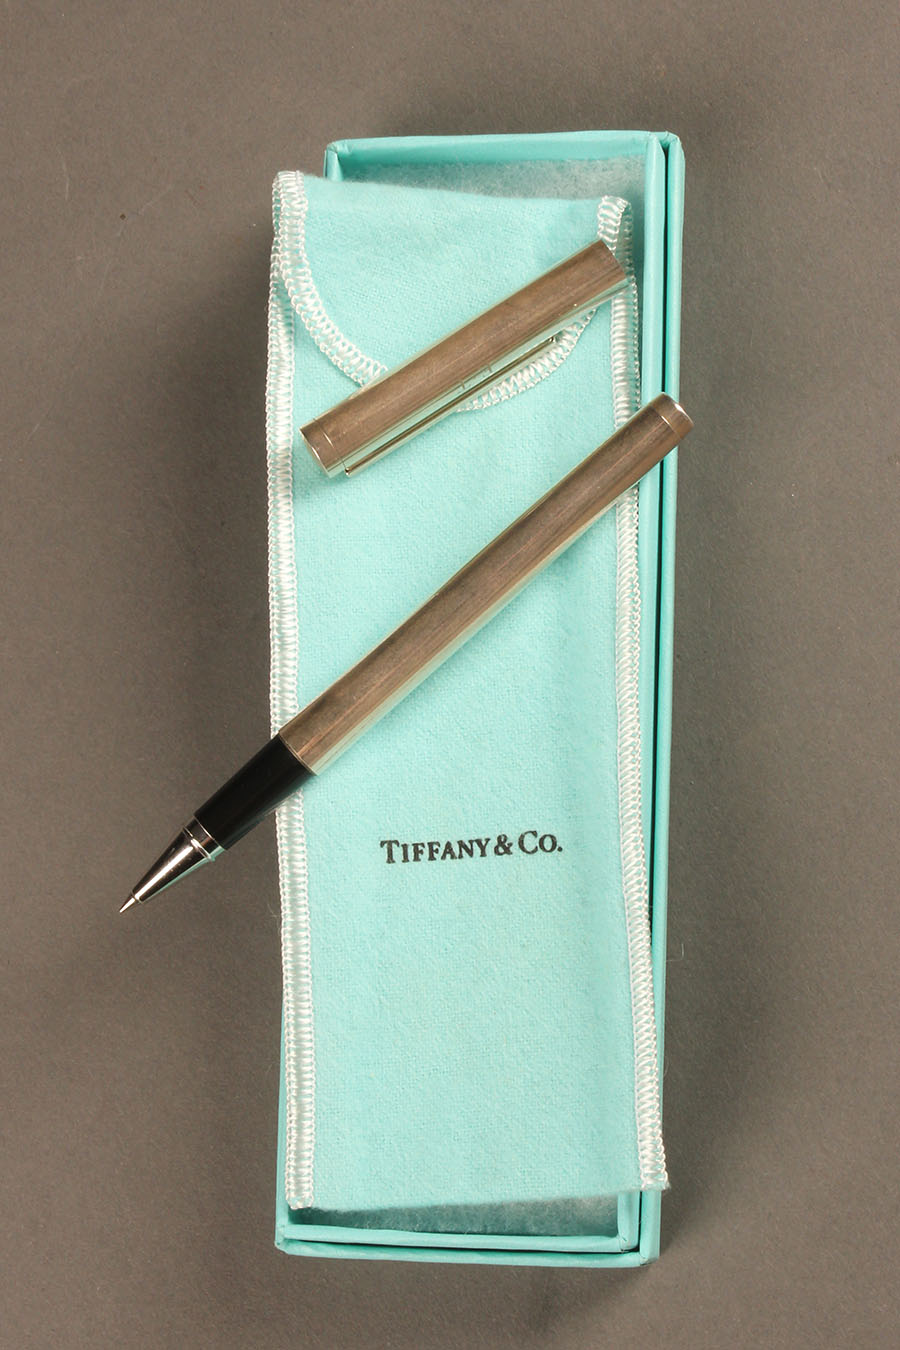 Tiffany & Co Sterling Silver Purse Pen Diamond Cut Vintage 